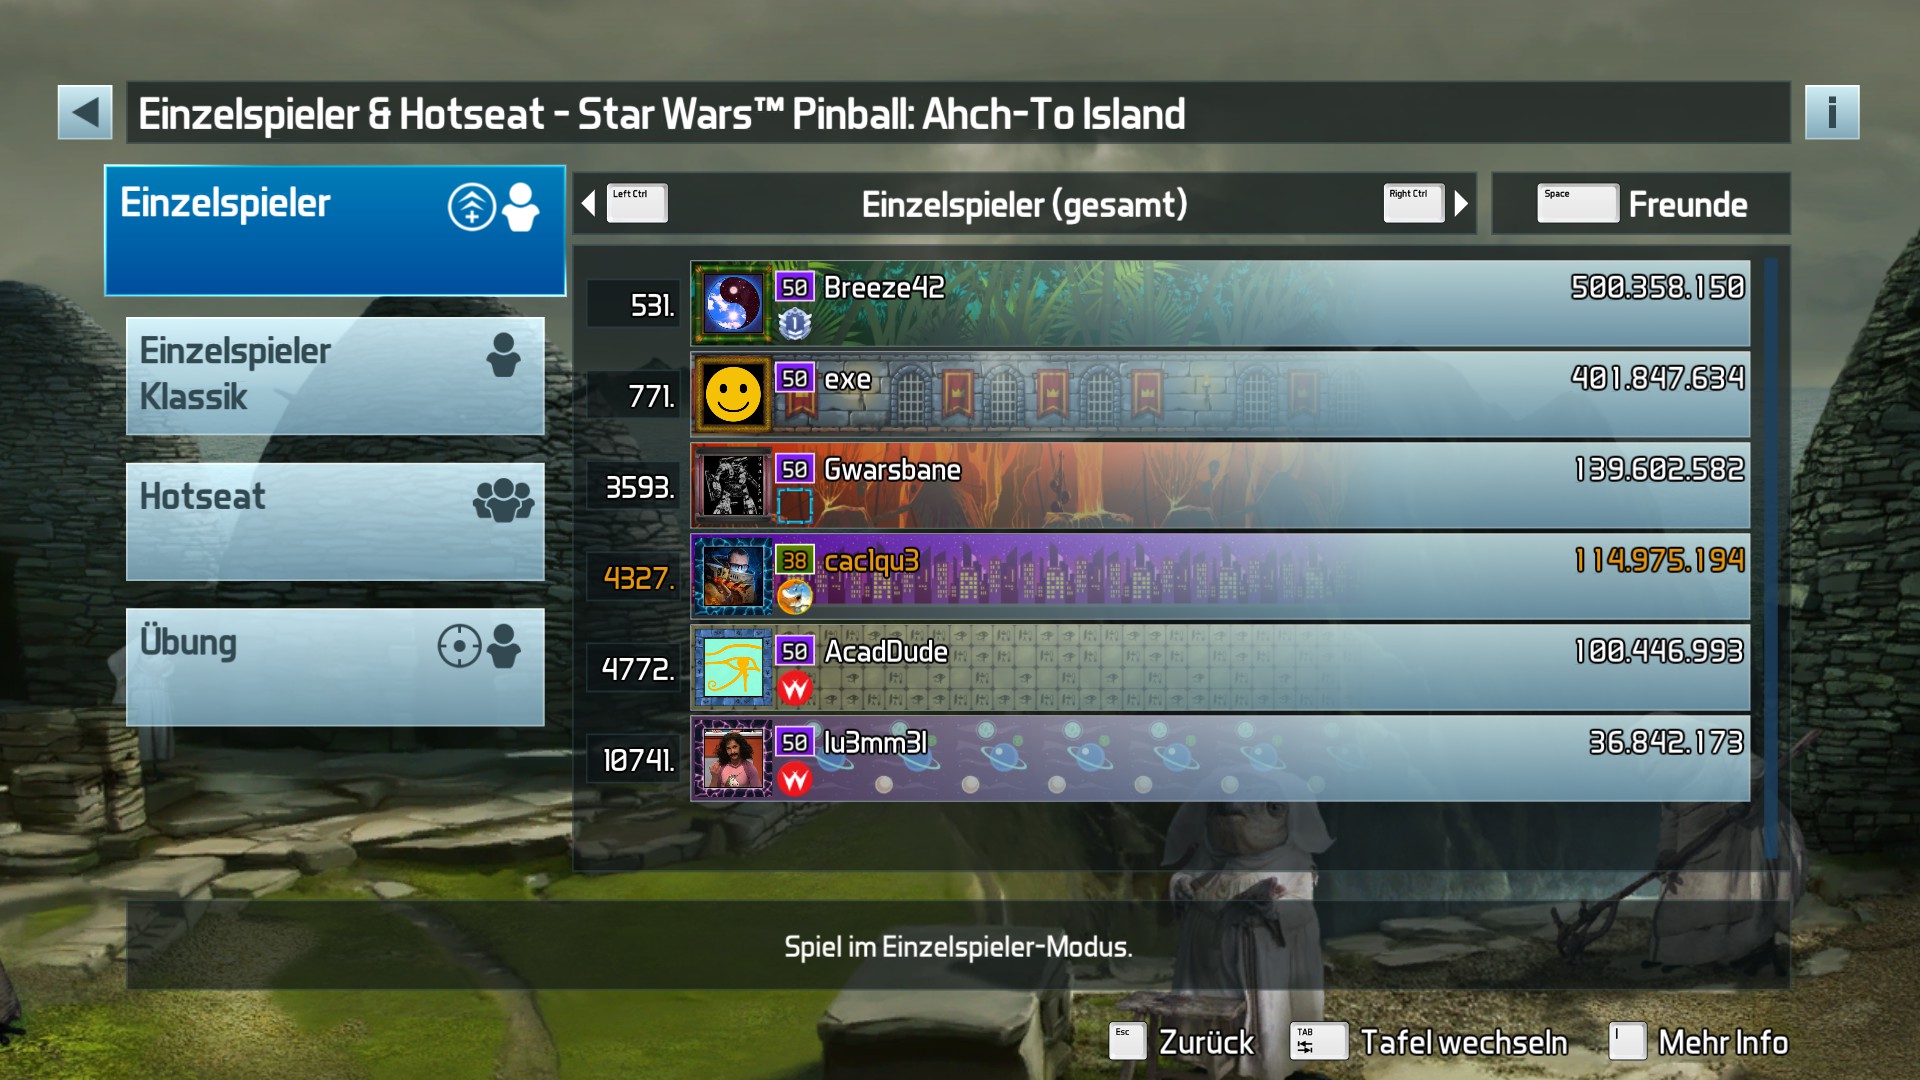 e2e4: Pinball FX3: Star Wars Pinball: Ahch-To Island (PC) 114,975,194 points on 2022-05-11 14:57:52